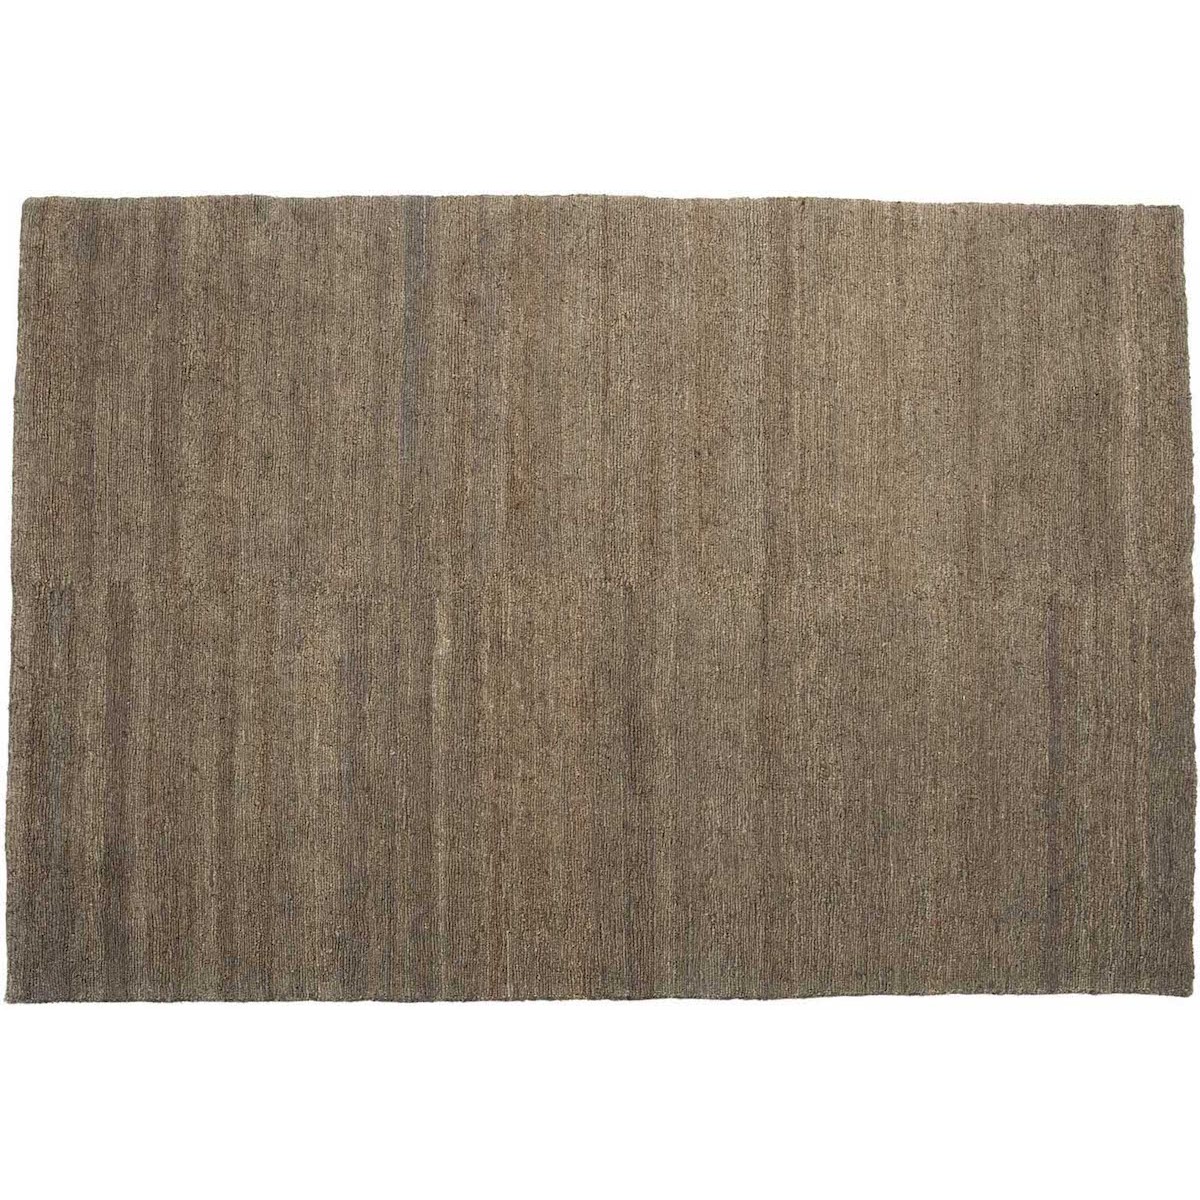 170x240cm - khaki - Earth rug